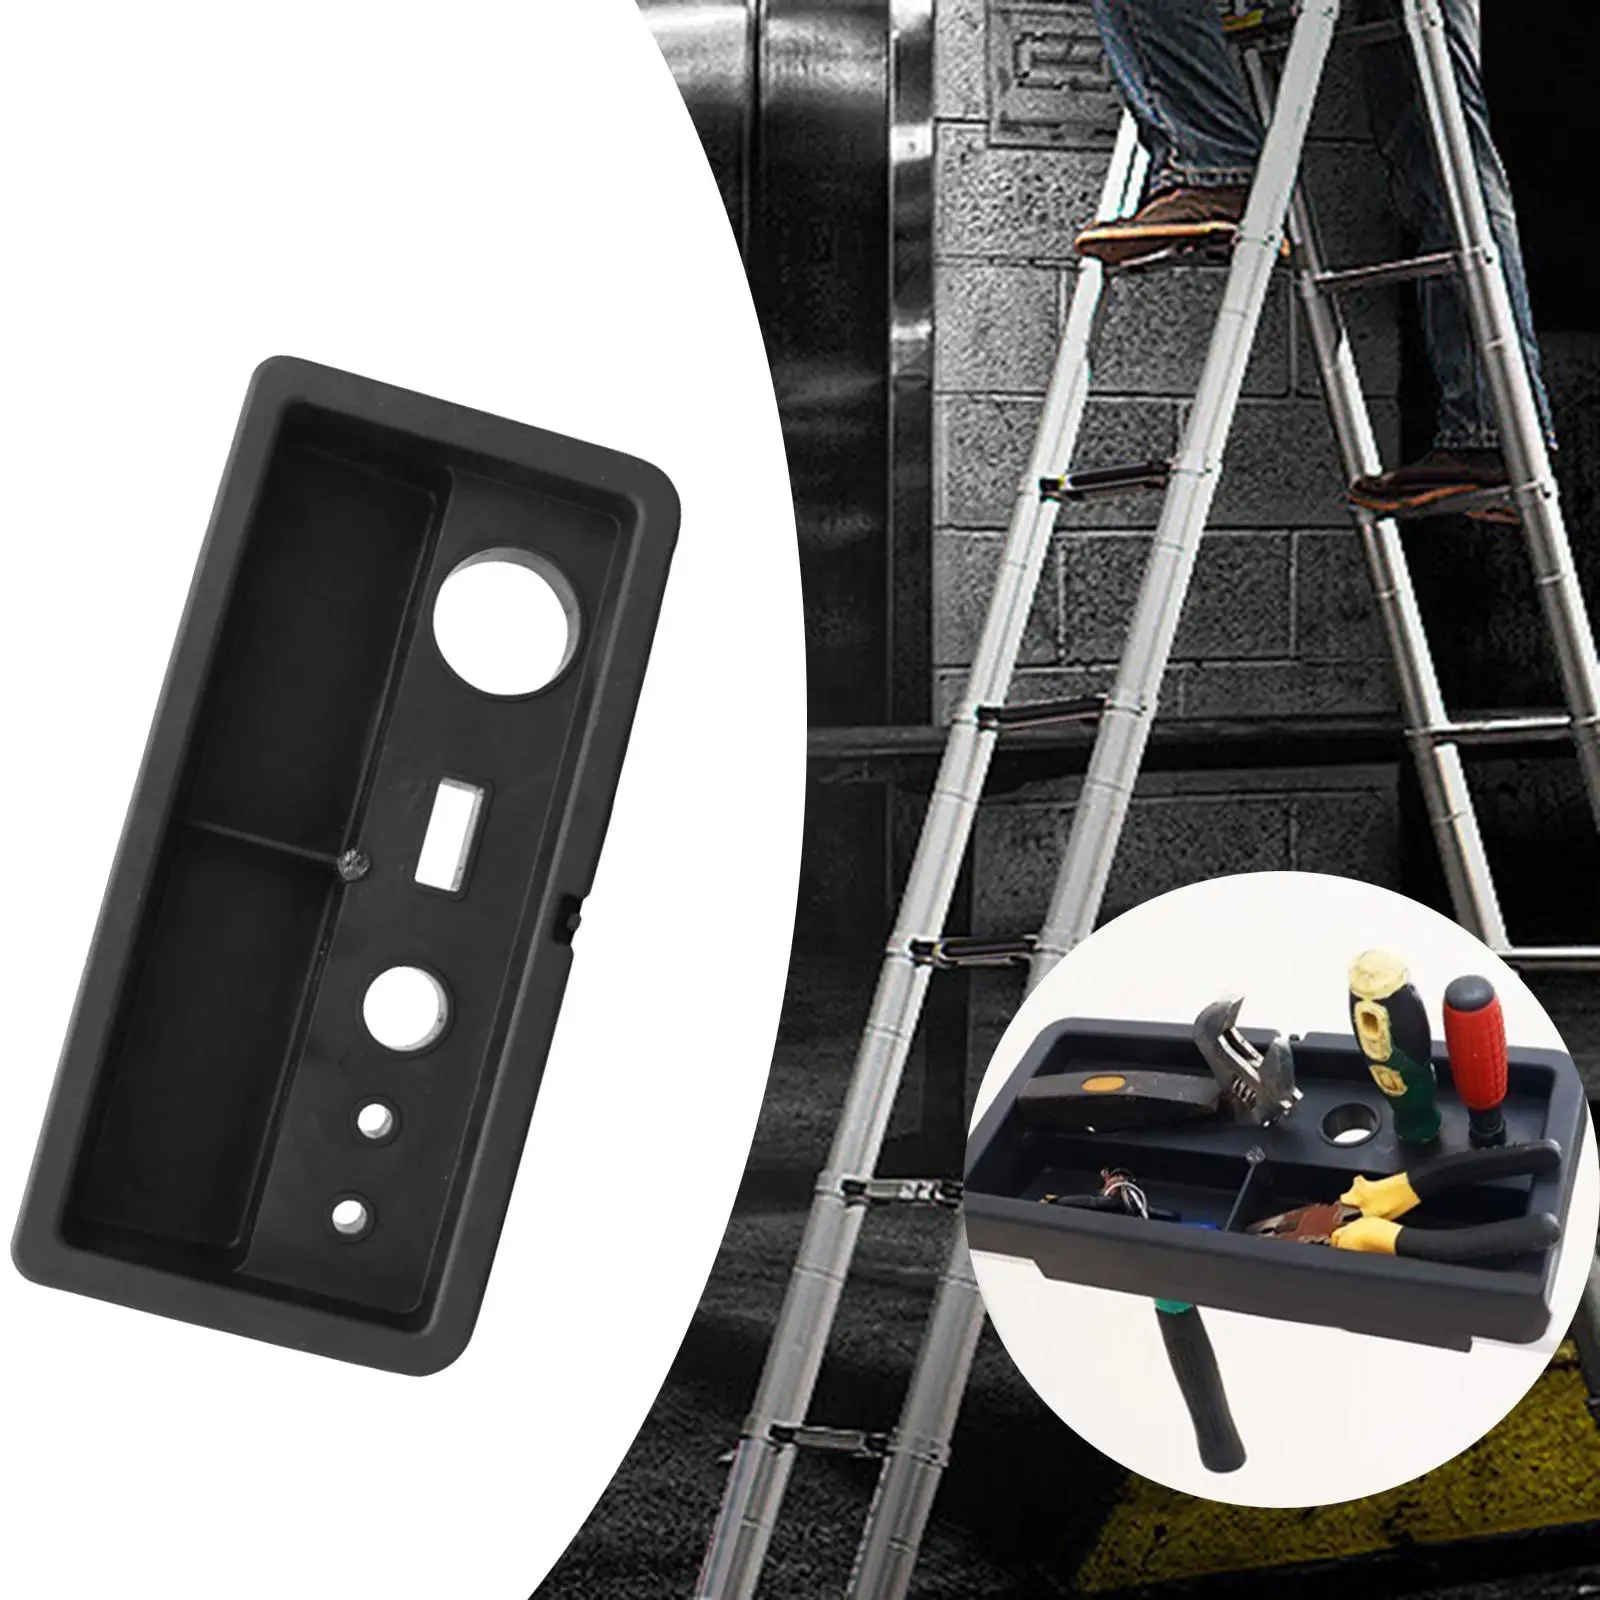 Ladder Tray Accessories Brushes Multipurpose Durable Pratical Job Site Ladder Tool Storage Tray Ladder Organizer Attachment